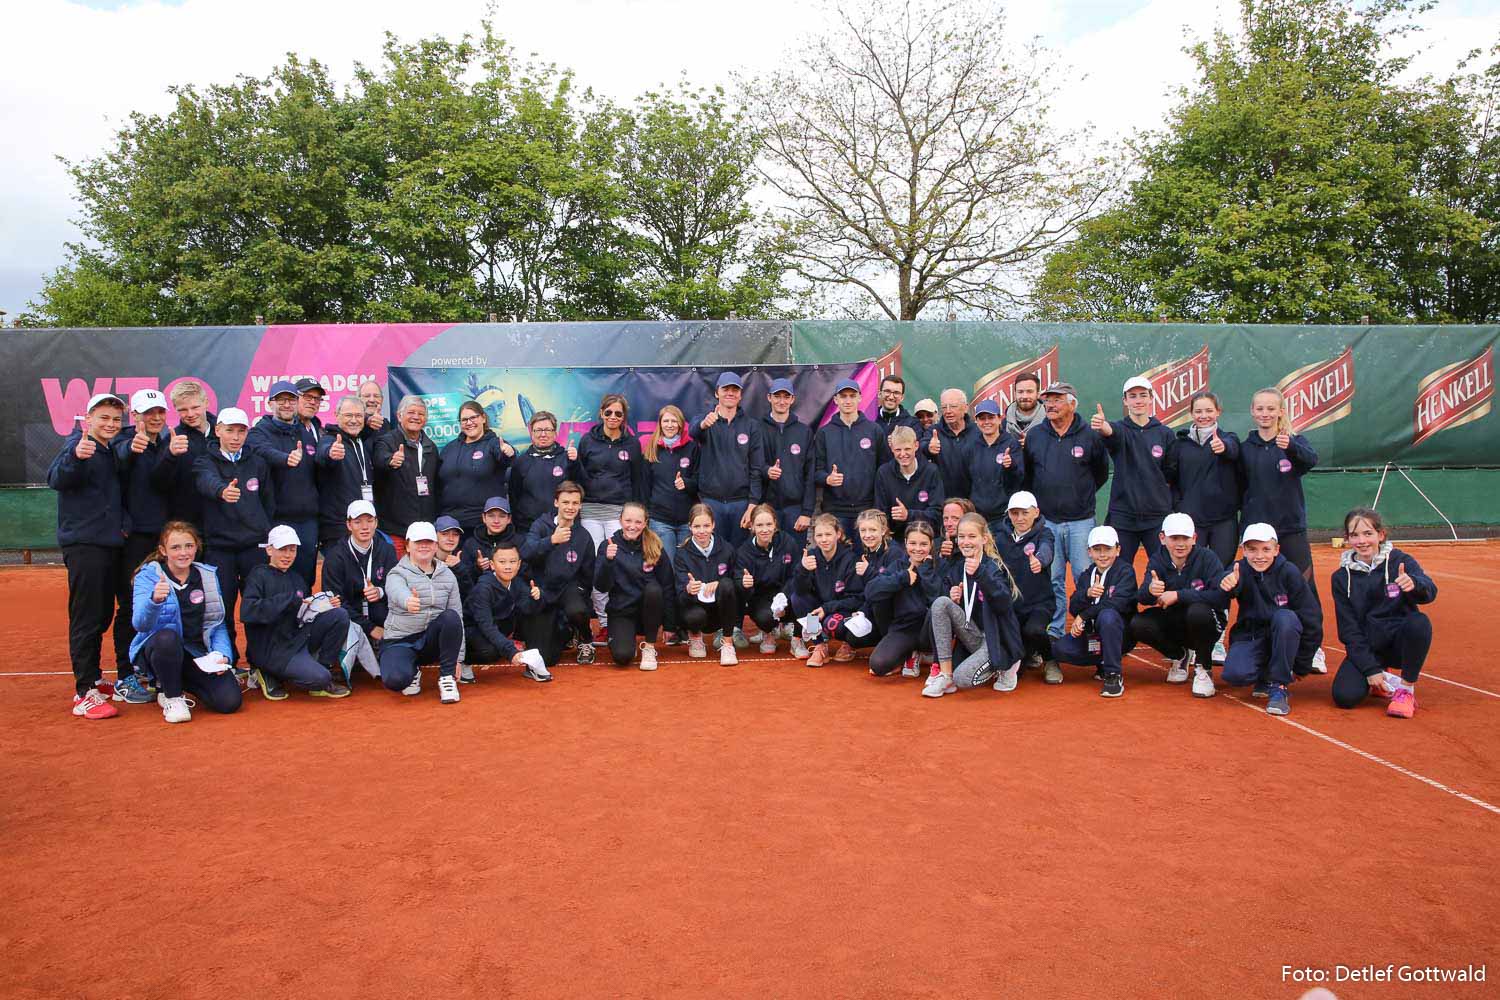 Wiesbaden Tennis Open 2019 | Foto: Detlef Gottwald | www.detlef-gottwald.de